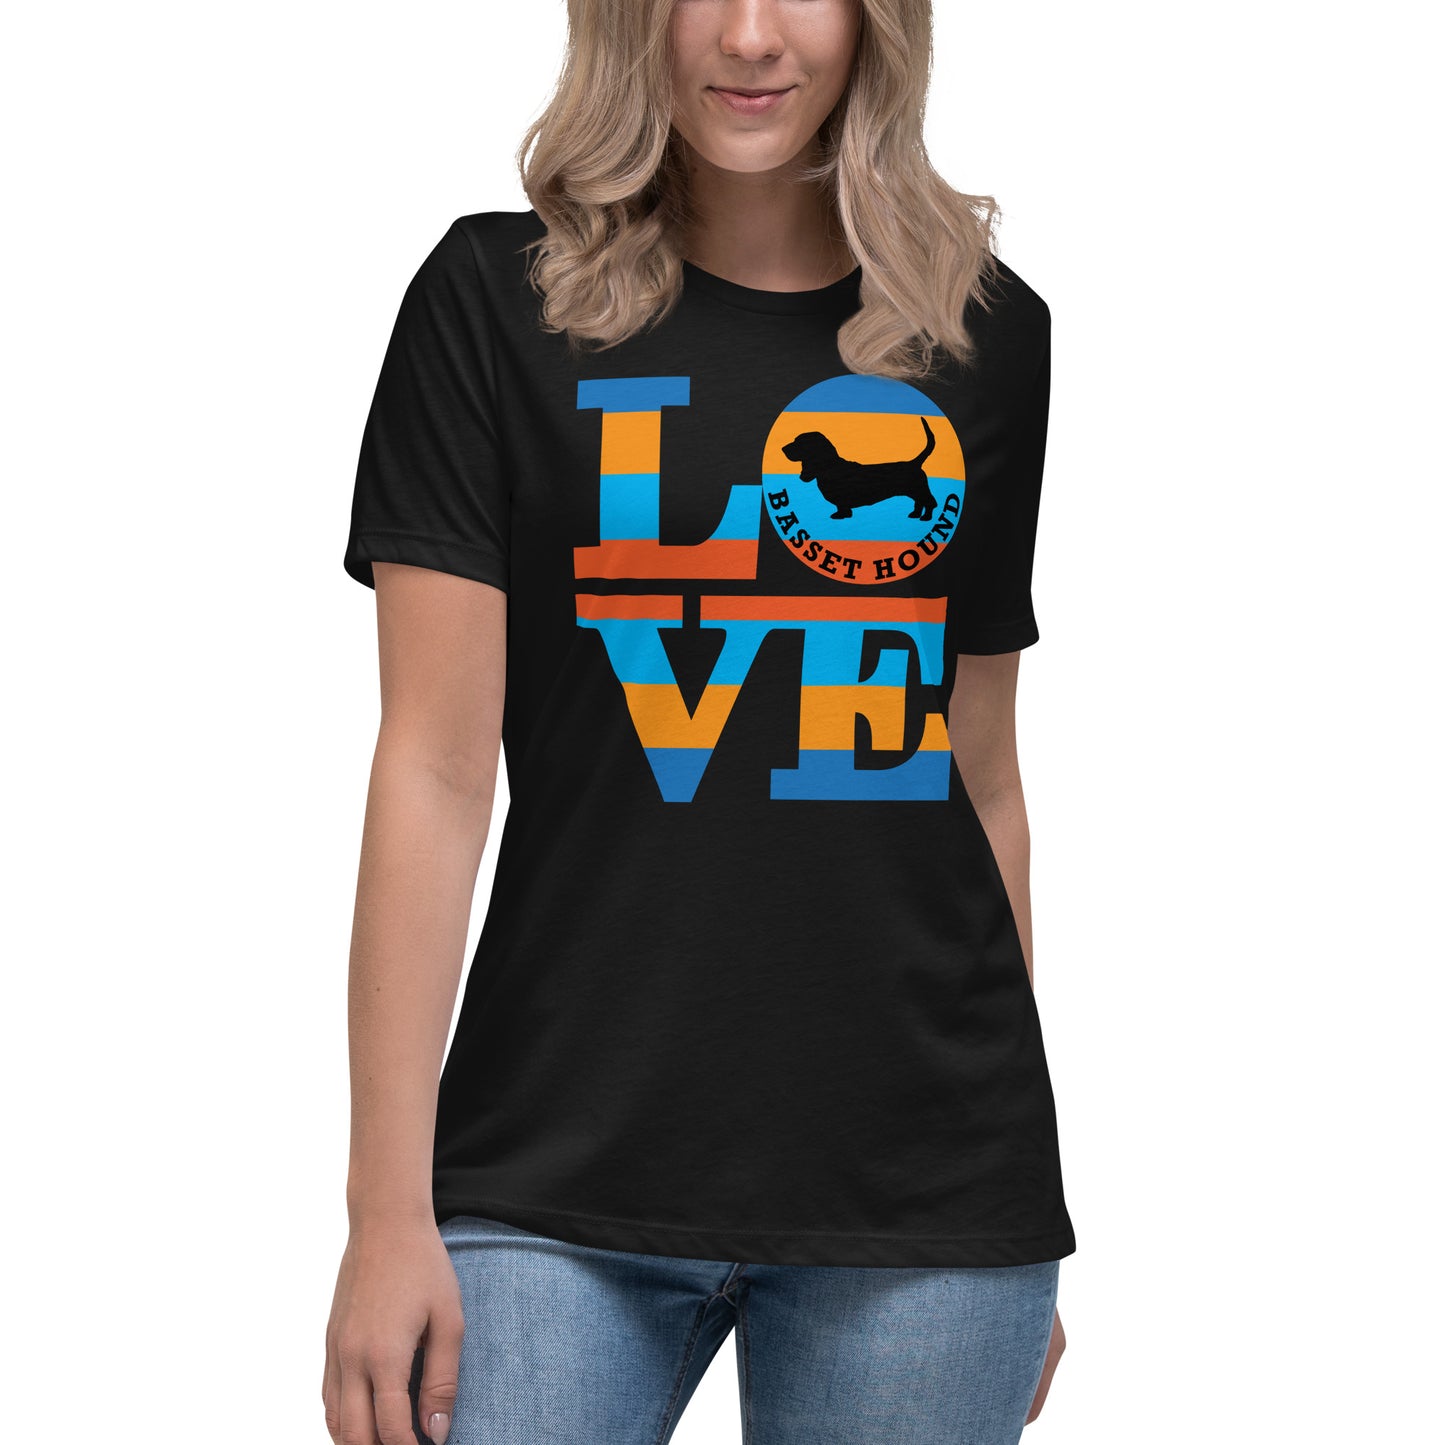 Basset Hound Love women’s black t-shirt by Dog Artistry.